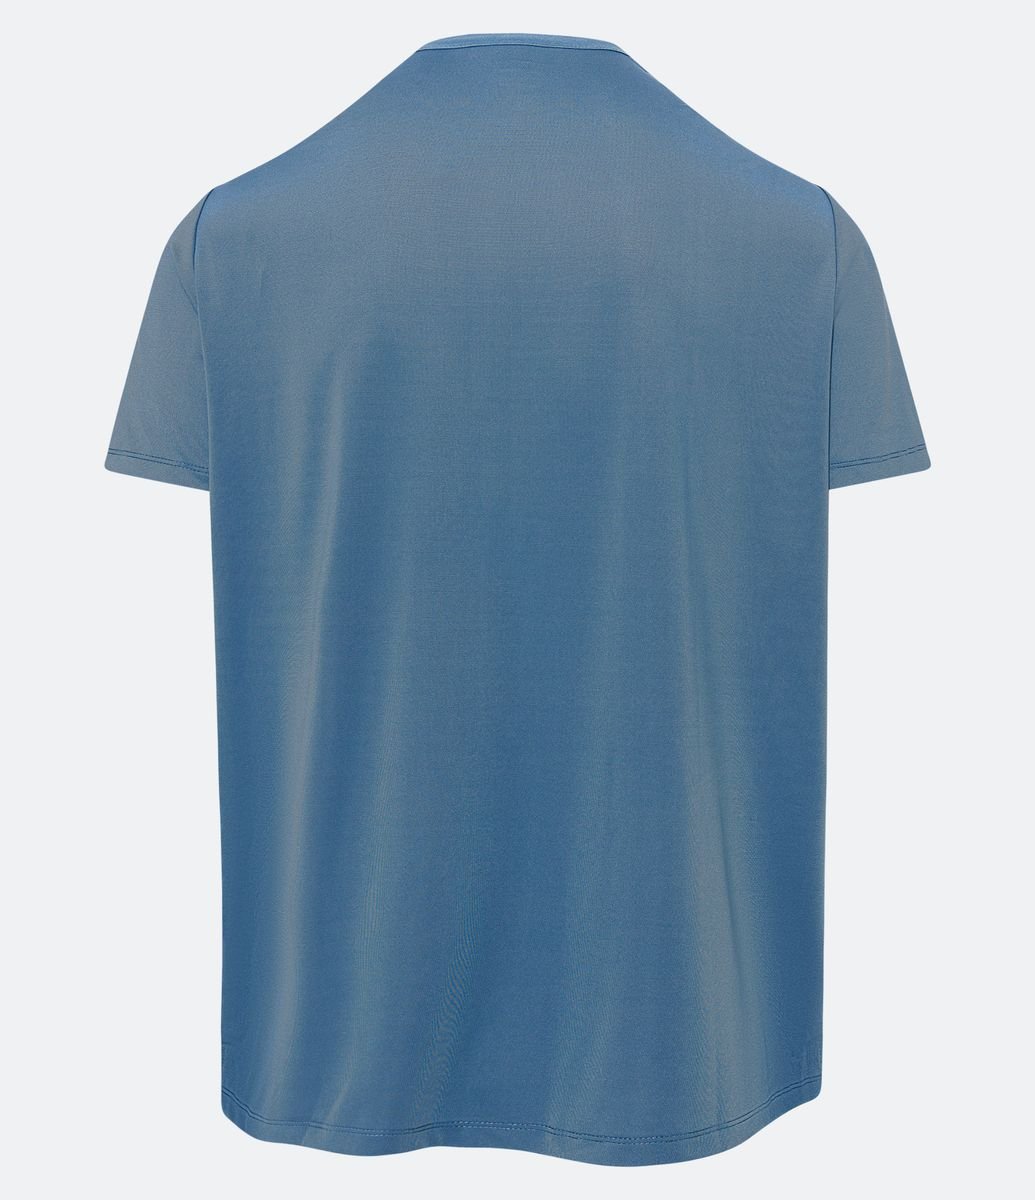 Camisa Performance Dry Compress BOLT Azul